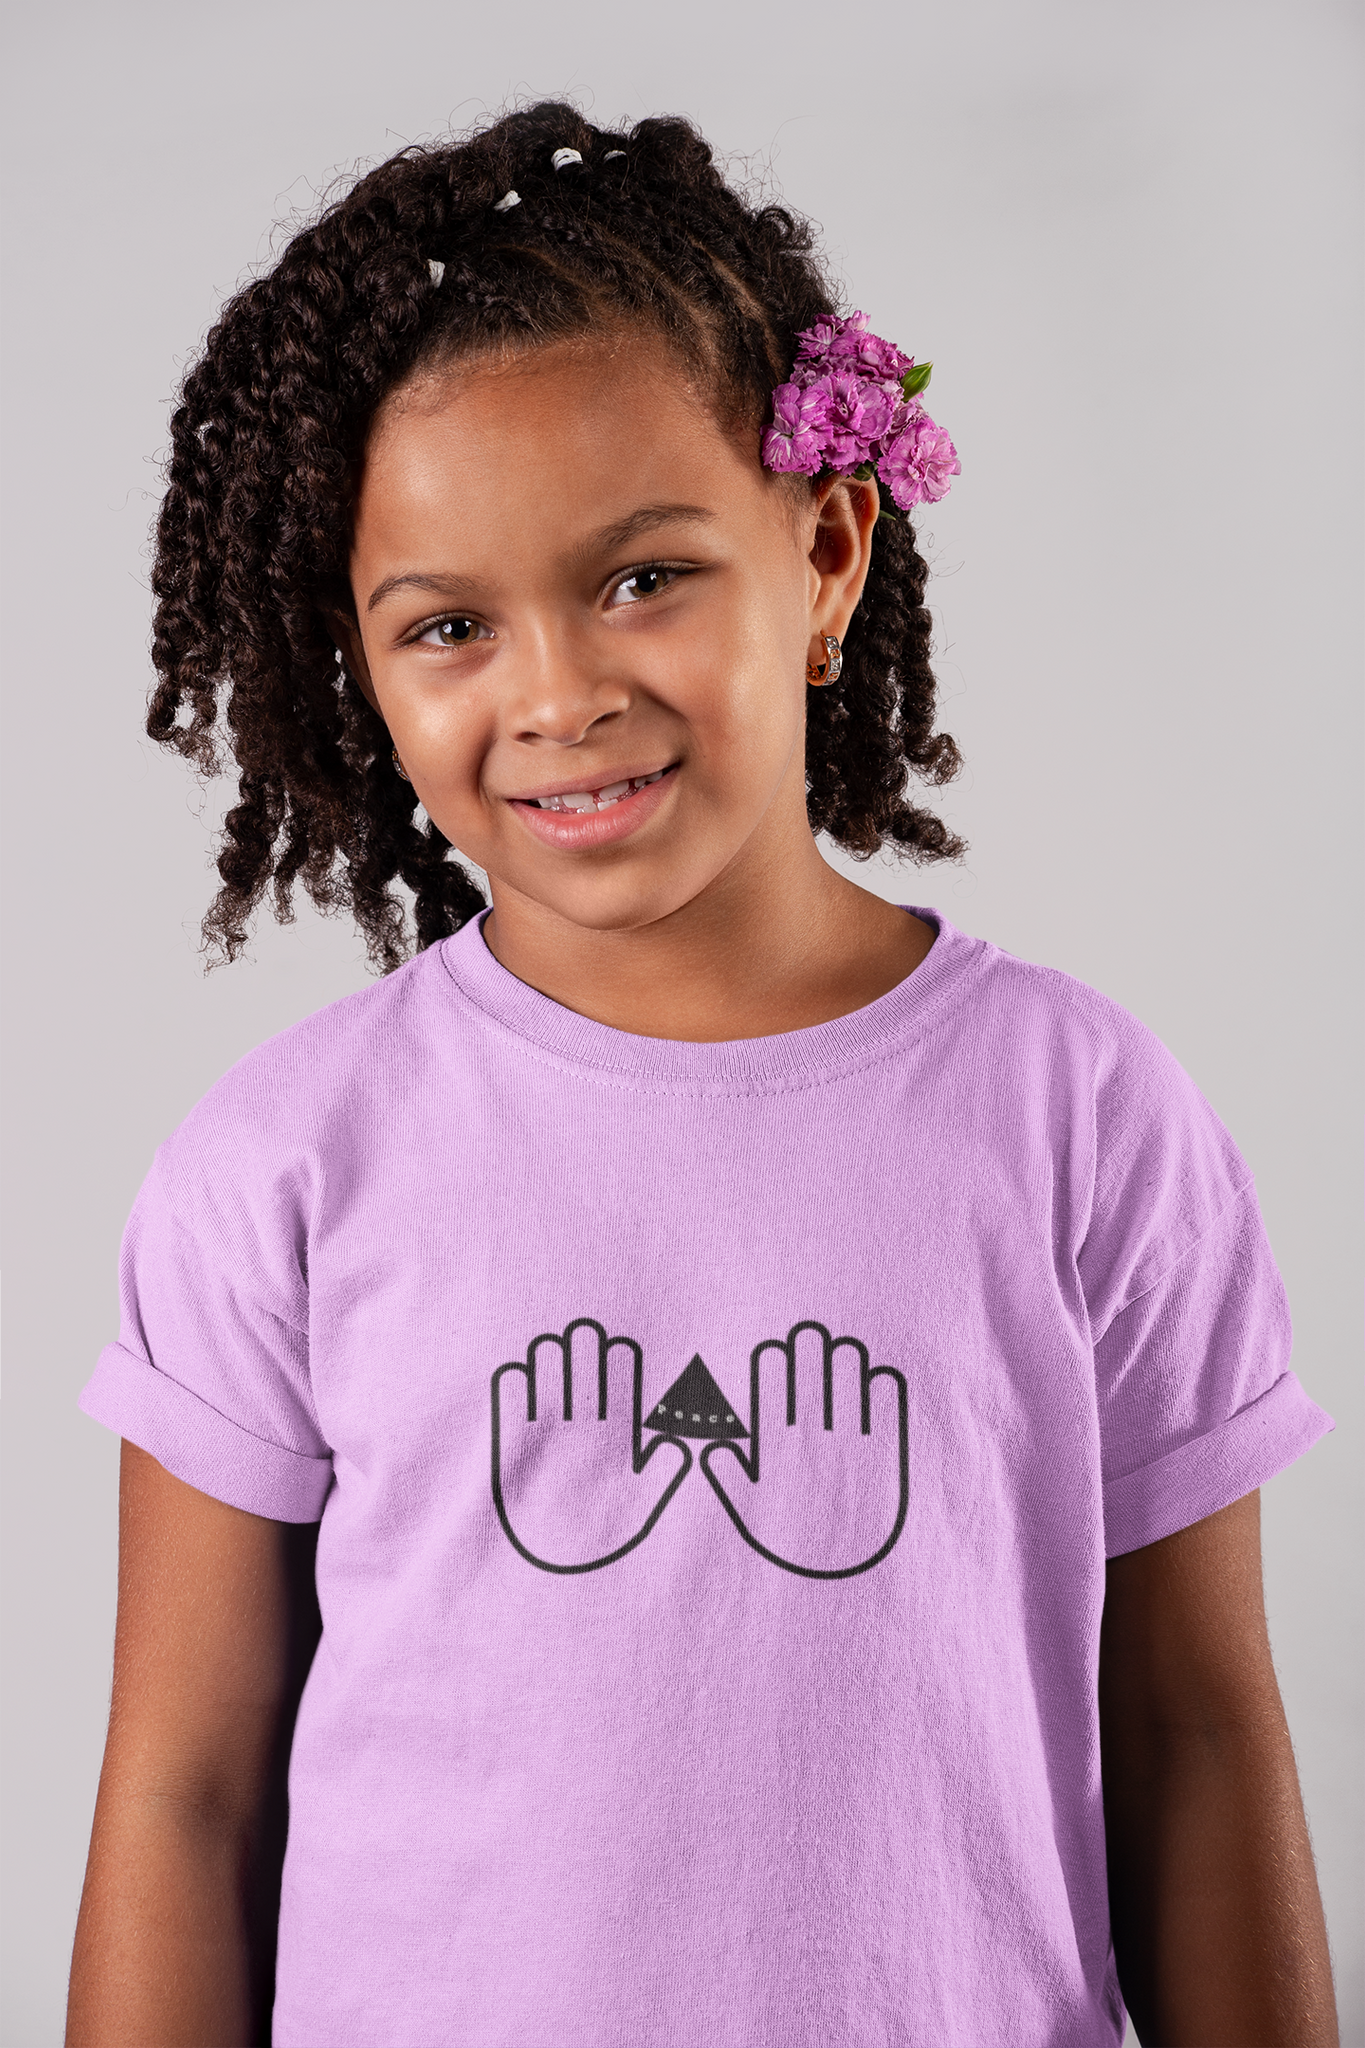 Raise-up Toddler T-shirt